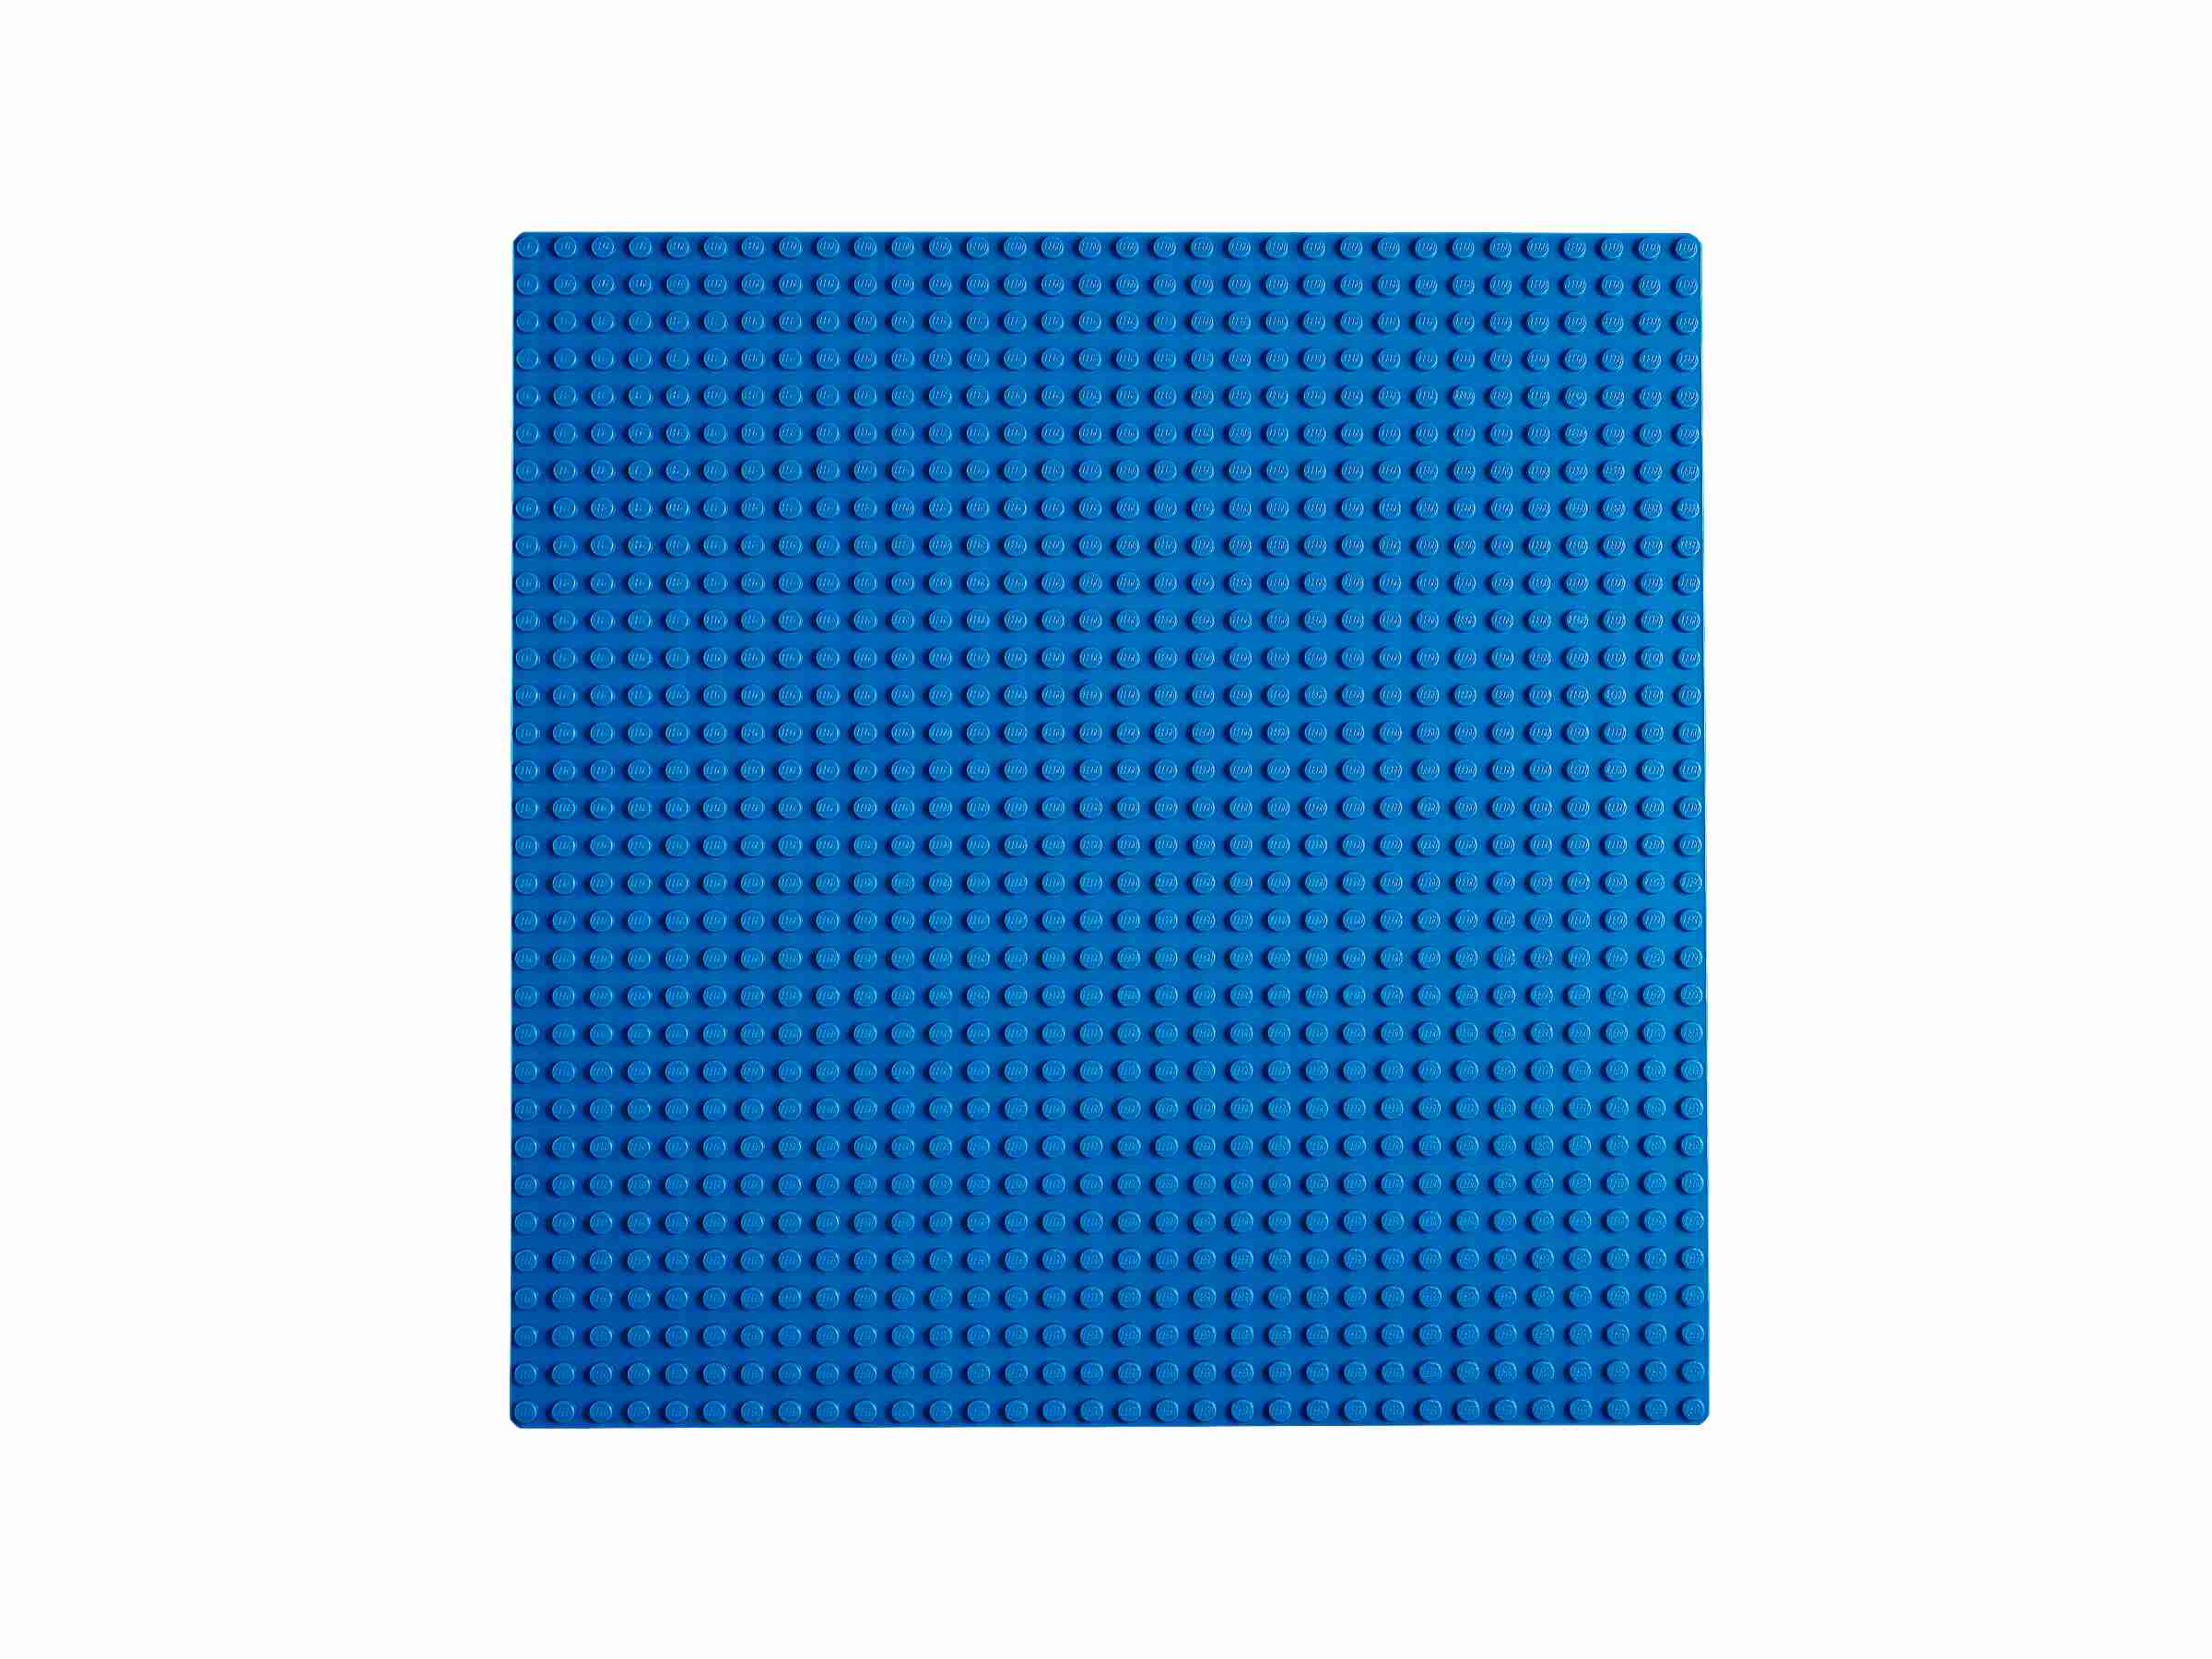 LEGO 11025 Classic Blaue Bauplatte, quadratische Grundplatte mit 32x32 Noppen